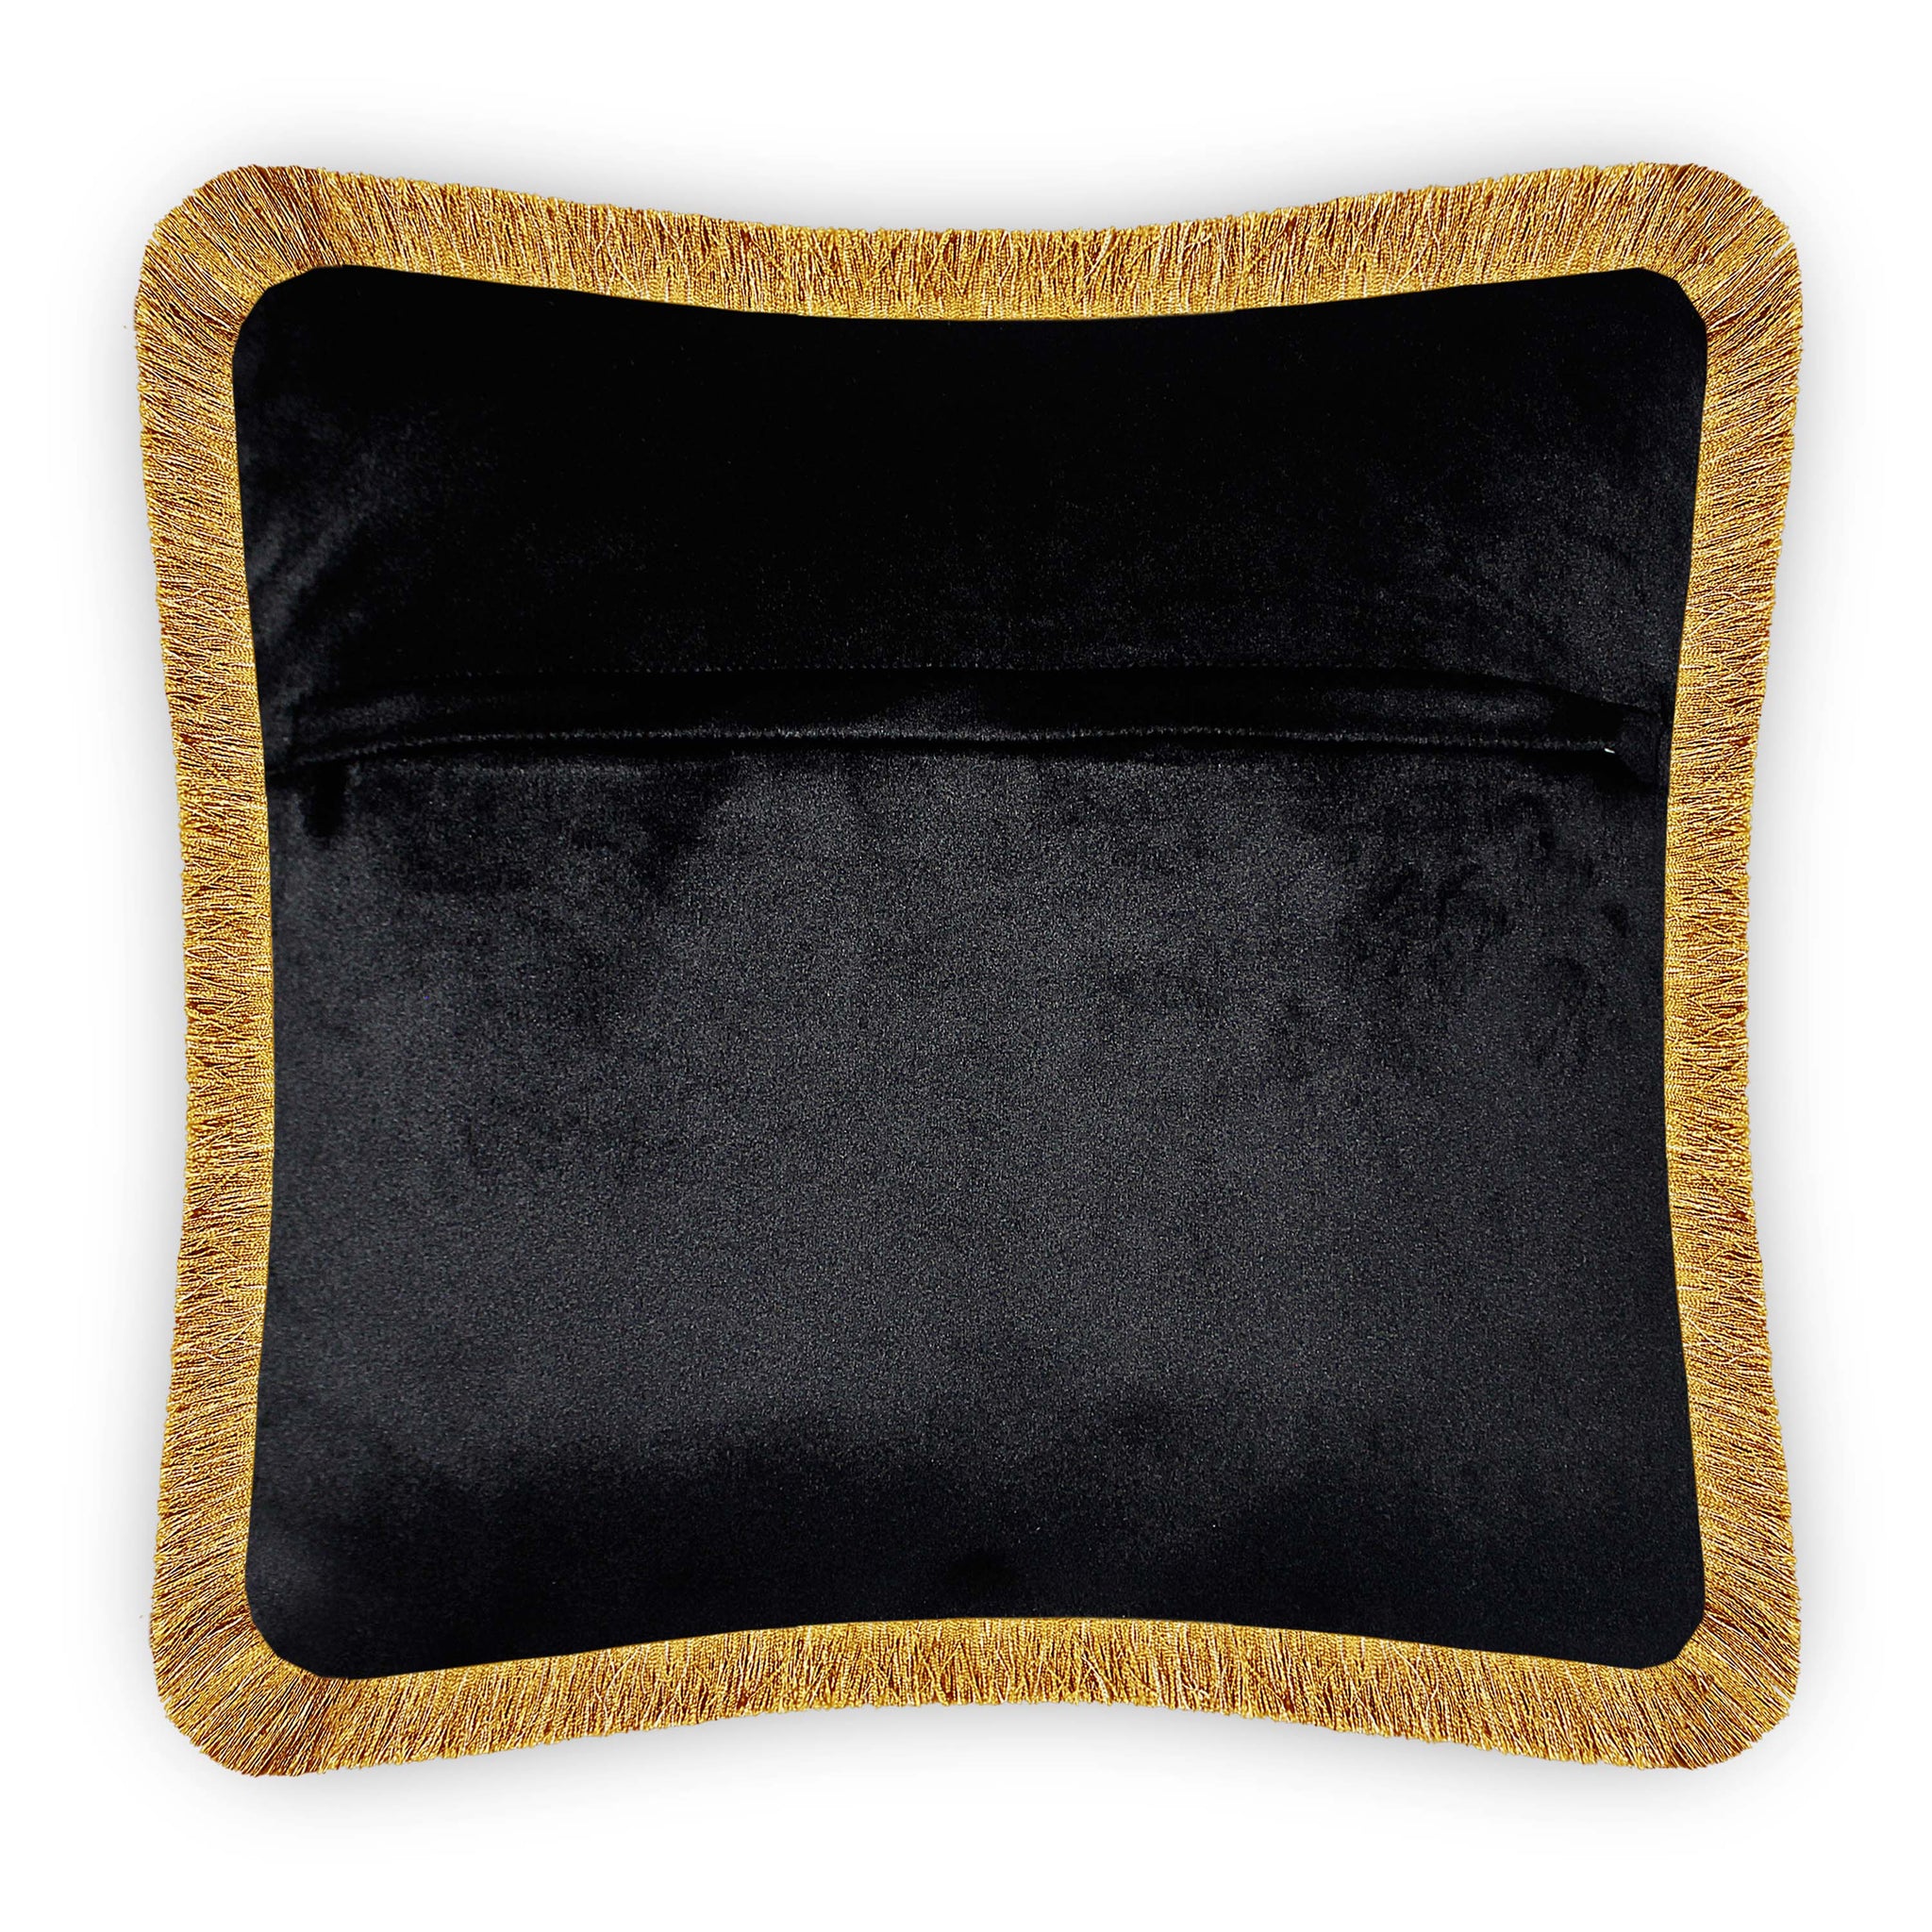 Black Velvet Cushion Cover Baroque Floral Decorative Pillowcase Classic Home Decor Throw Pillow for Sofa Chair Living Room 45x45 cm 18x18 In